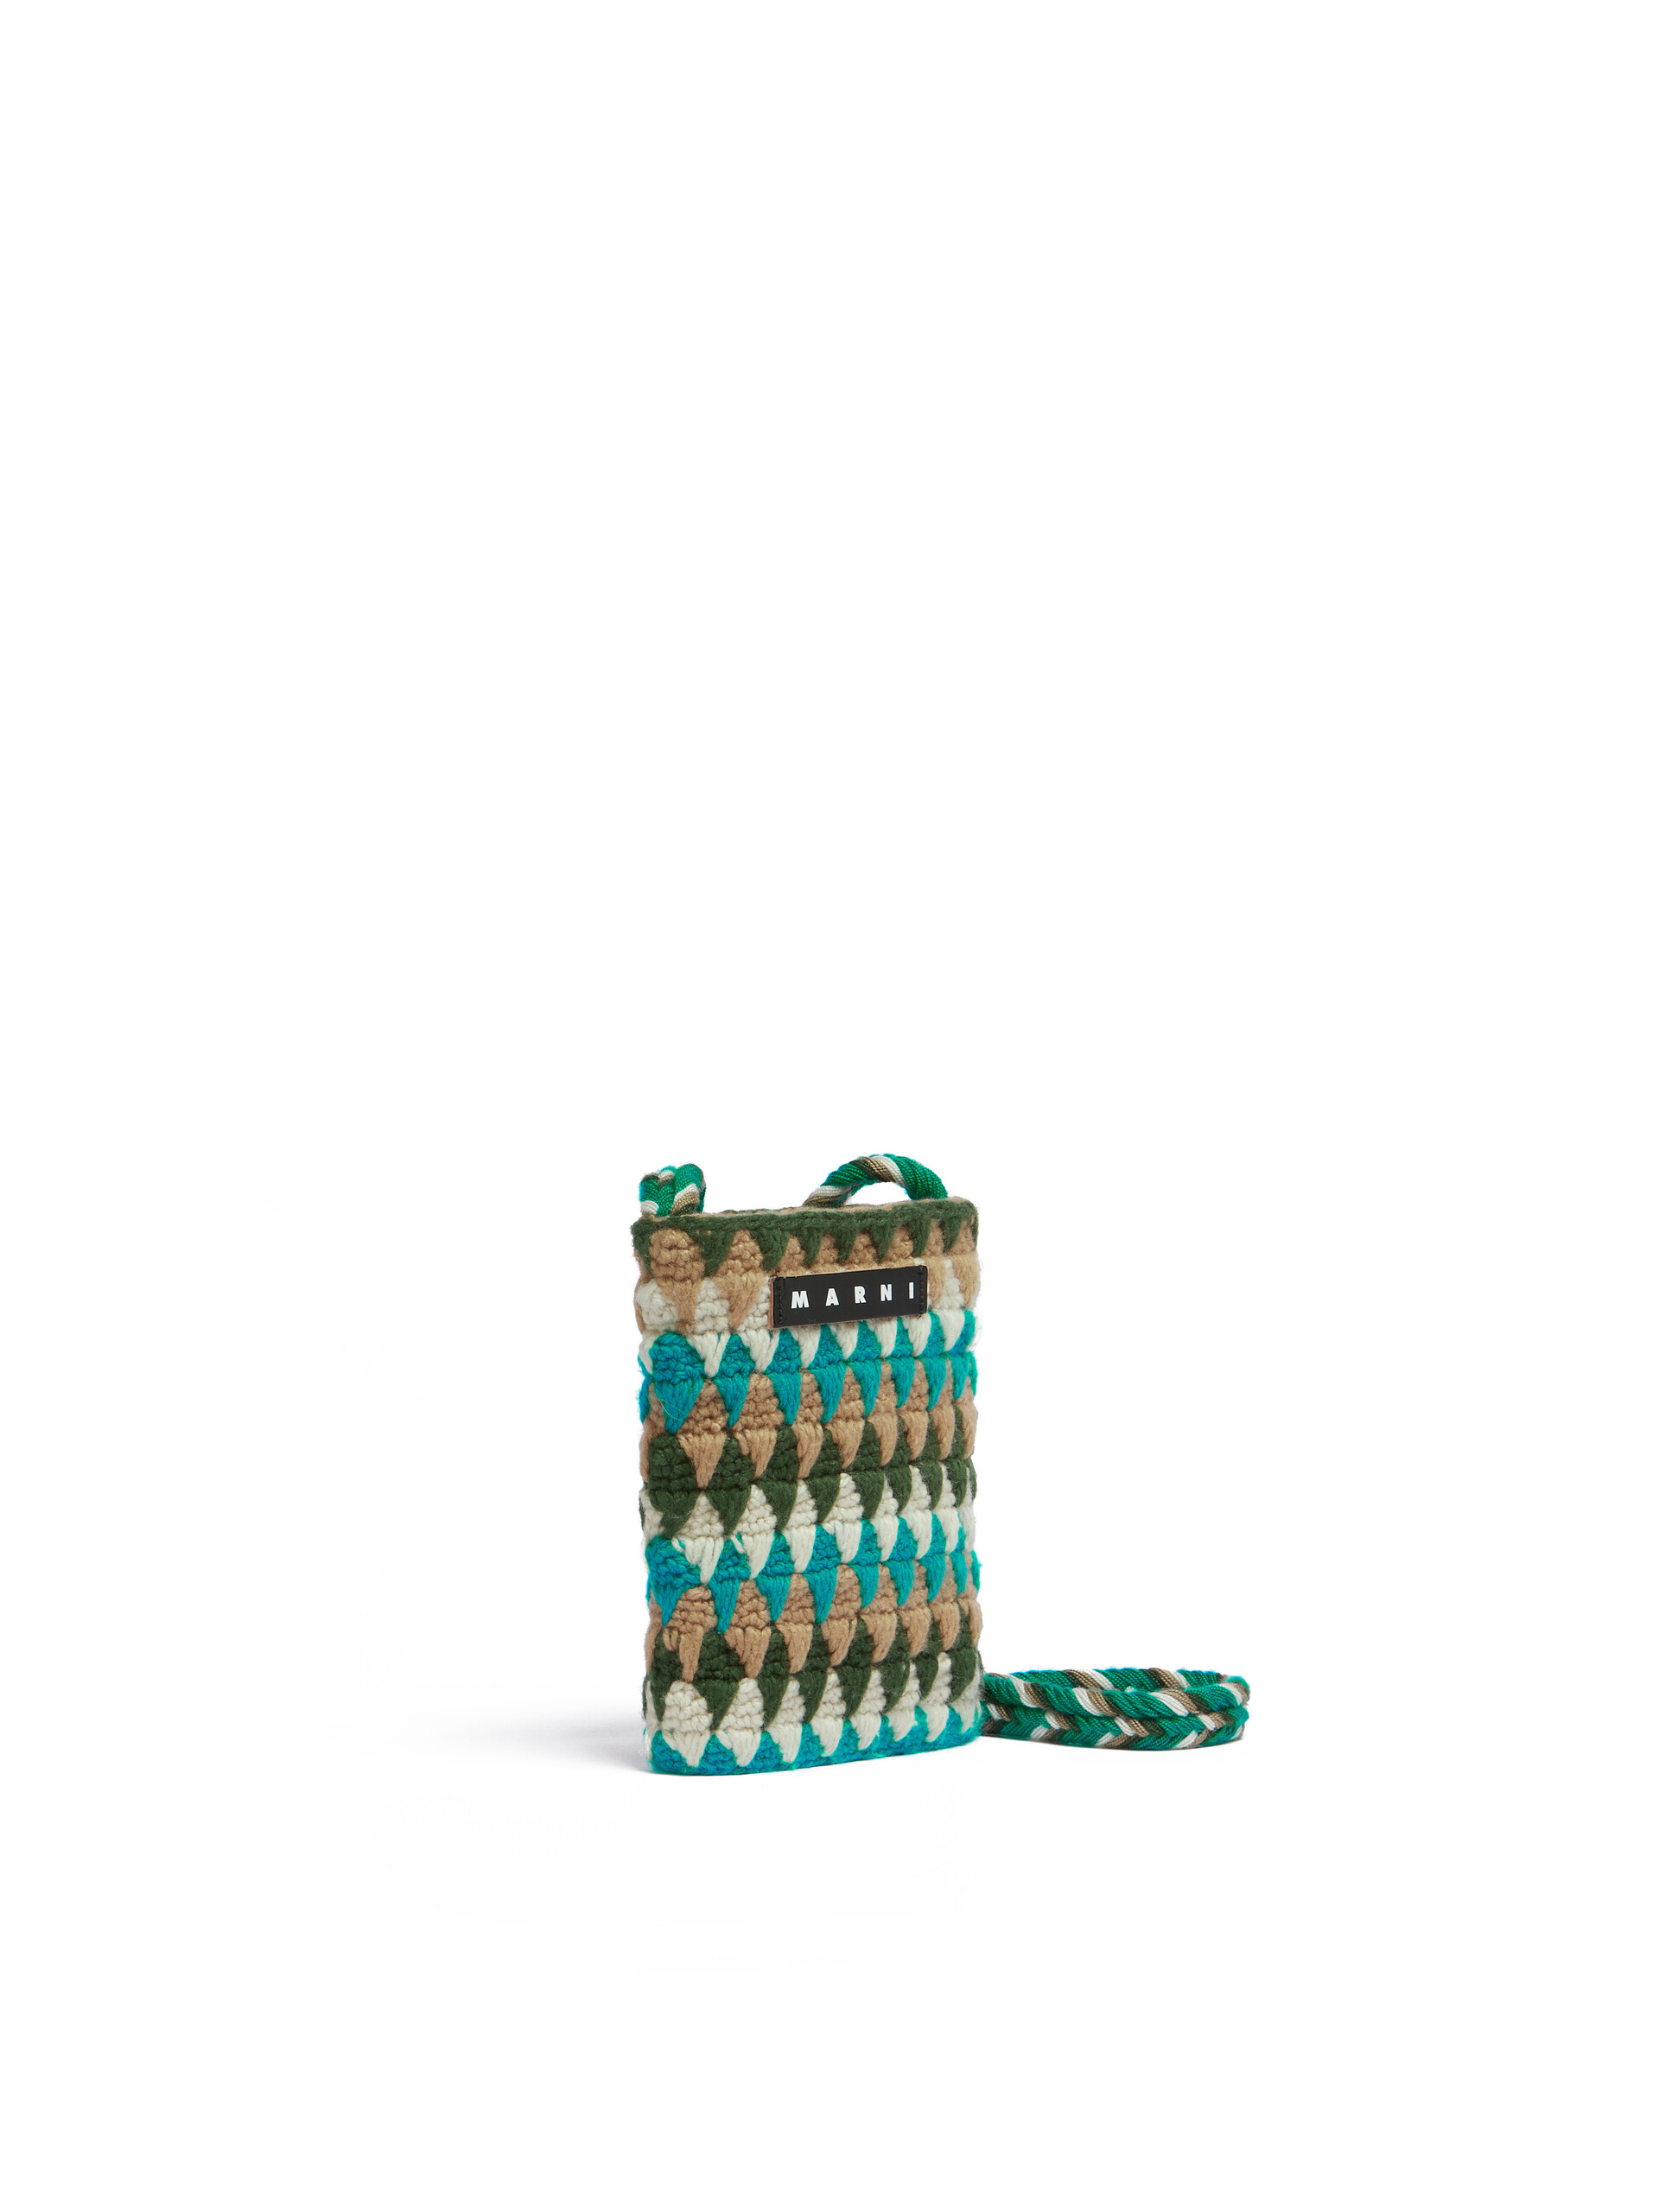 Grey Crochet Marni Market Chessboard Shoulder Bag - Shopping Bags - Image 2